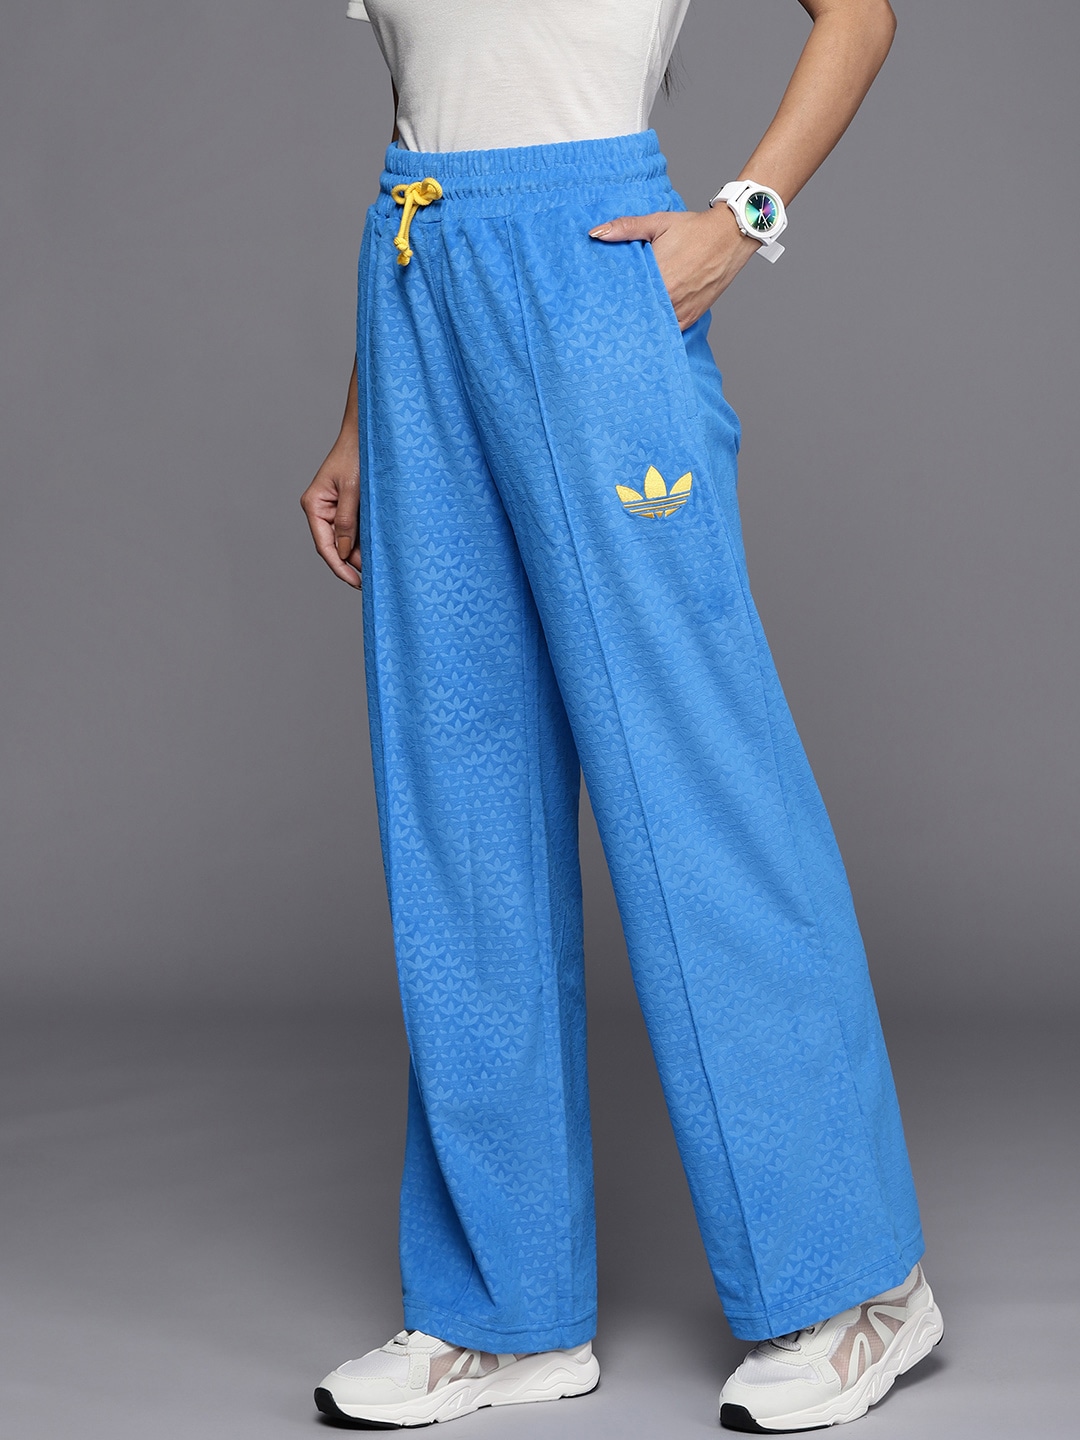 ADIDAS Originals Women Blue Brand Logo Velour Track Pants Price in India